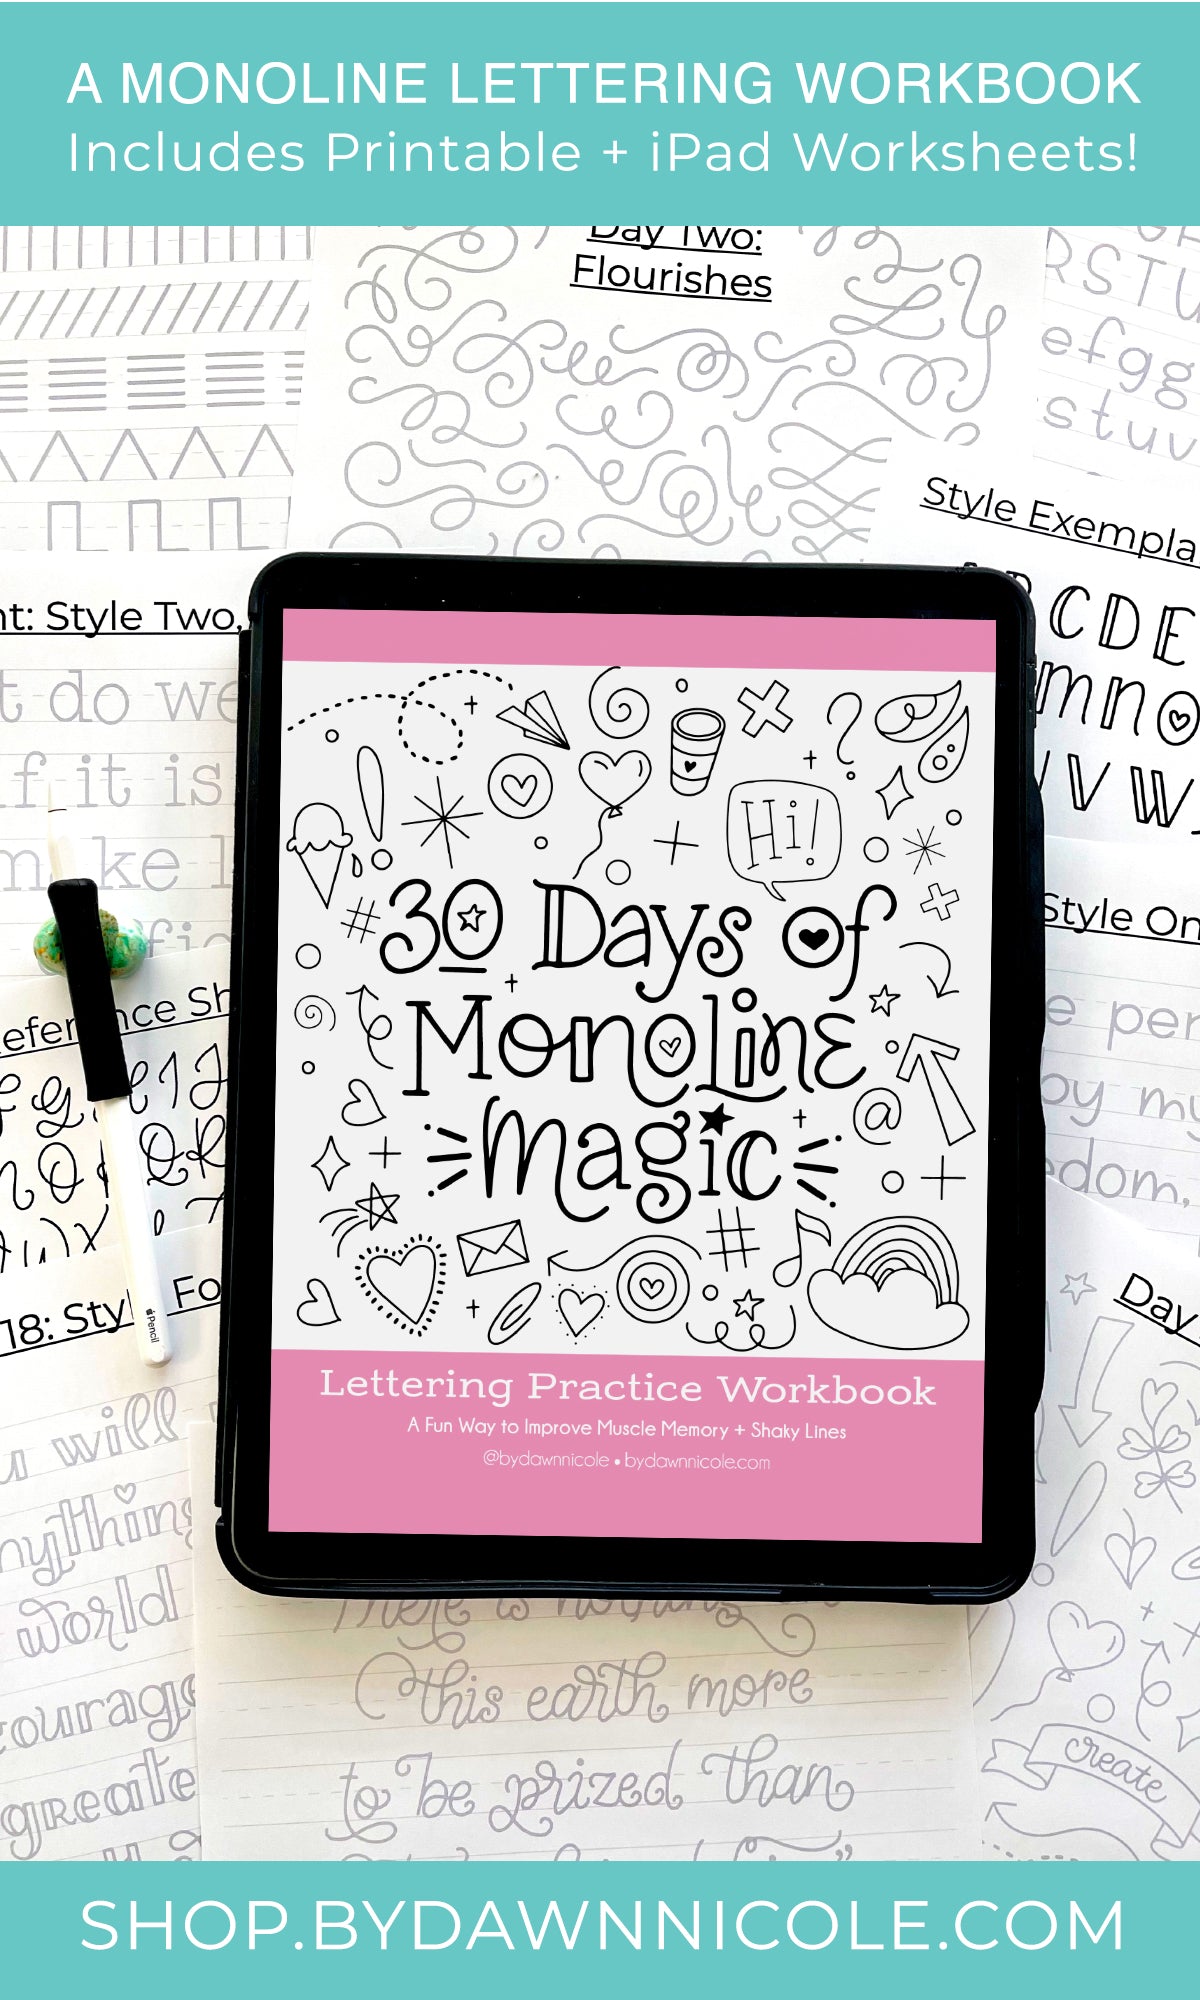 30 Days of Monoline Magic Workbook